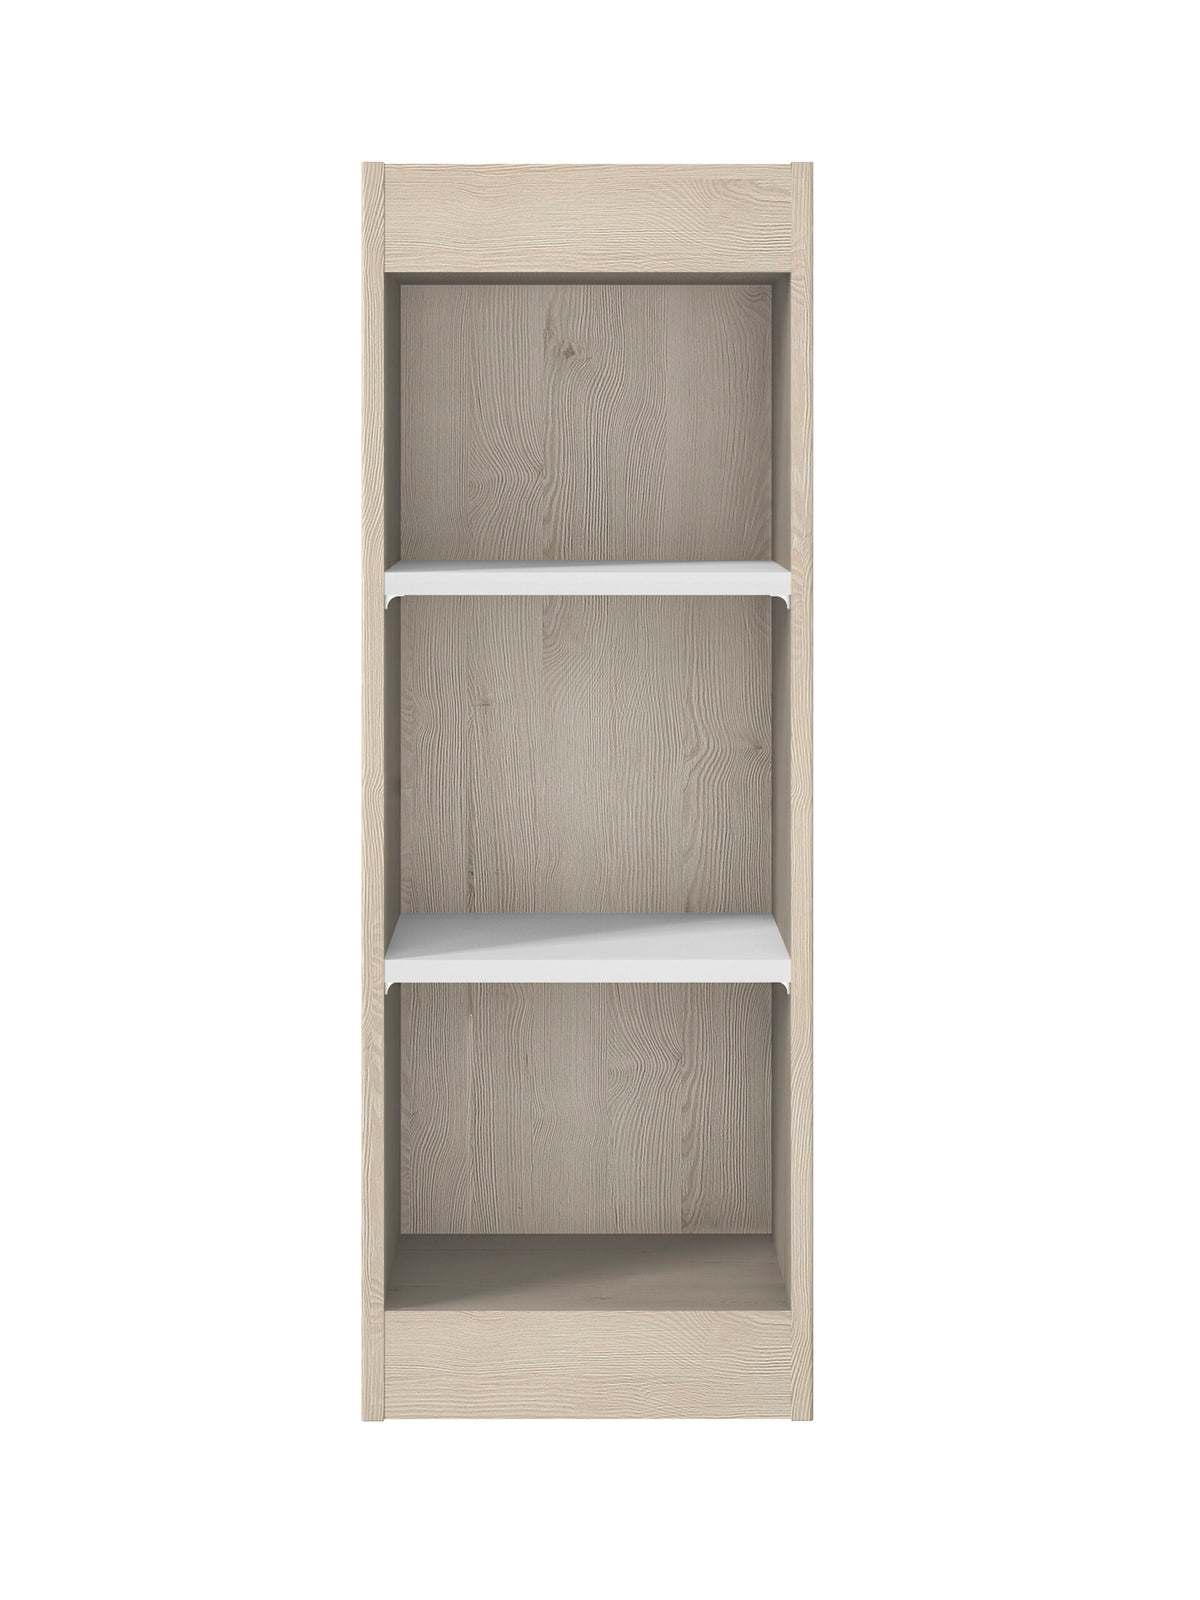 Petite bibliothèque Sacha - GALIPETTE - Cabinets & Storage par Galipette